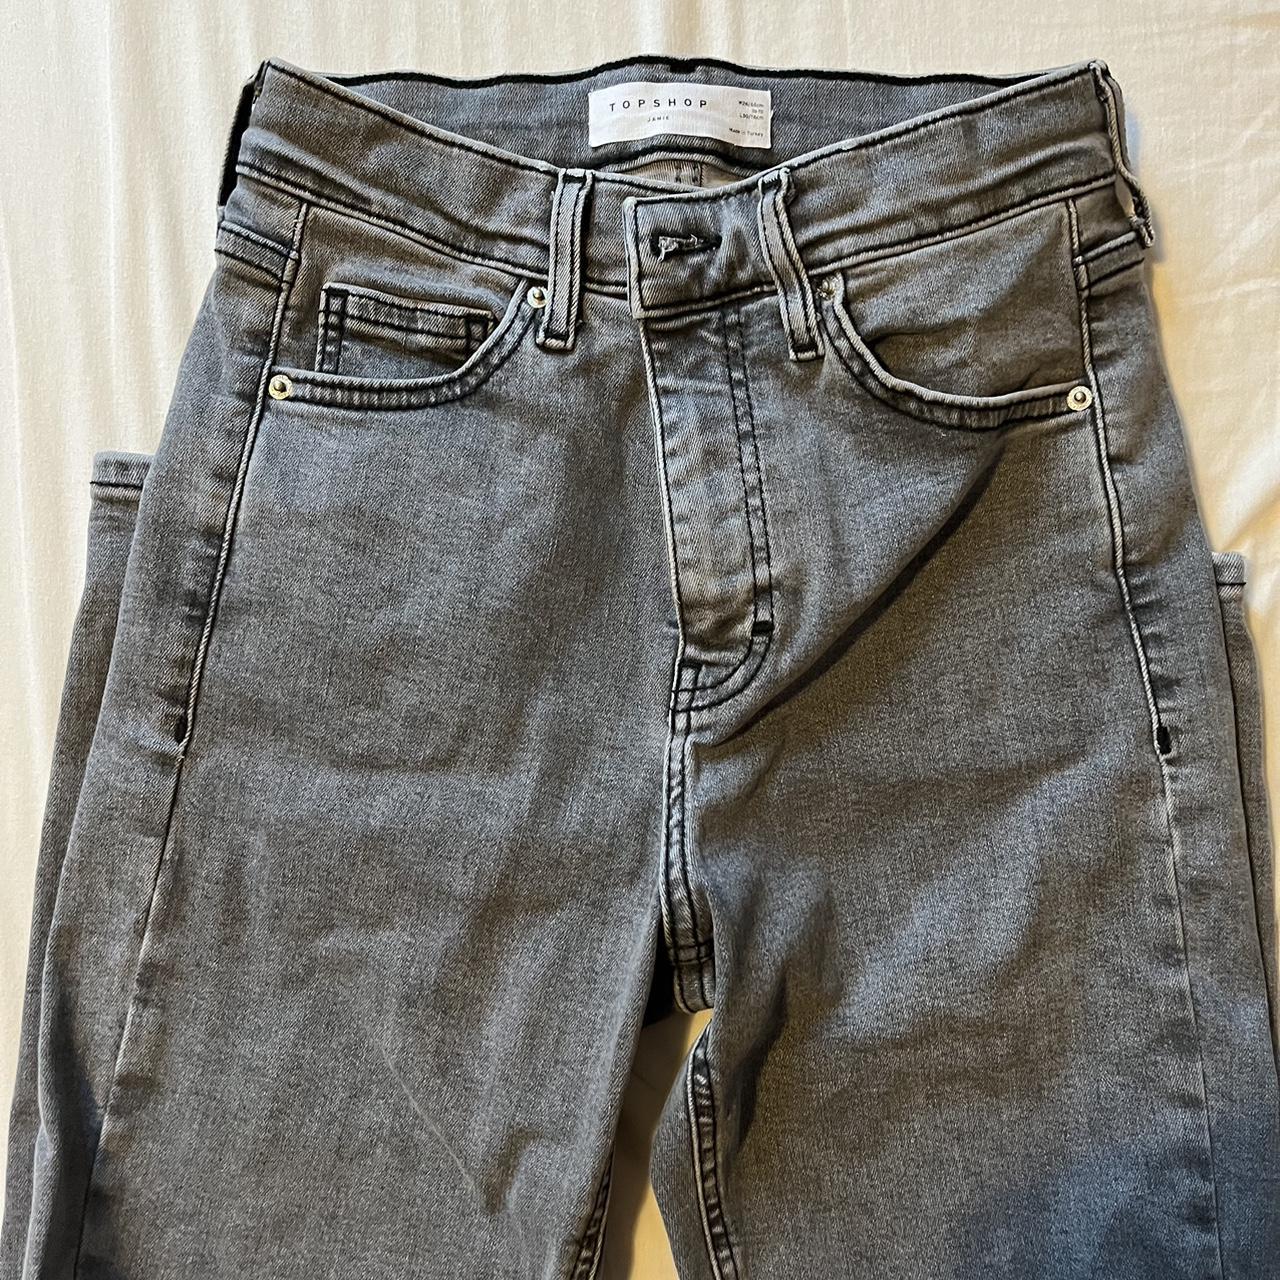 Topshop grey Jamie jeans - waist 26 (UK size 8) -... - Depop